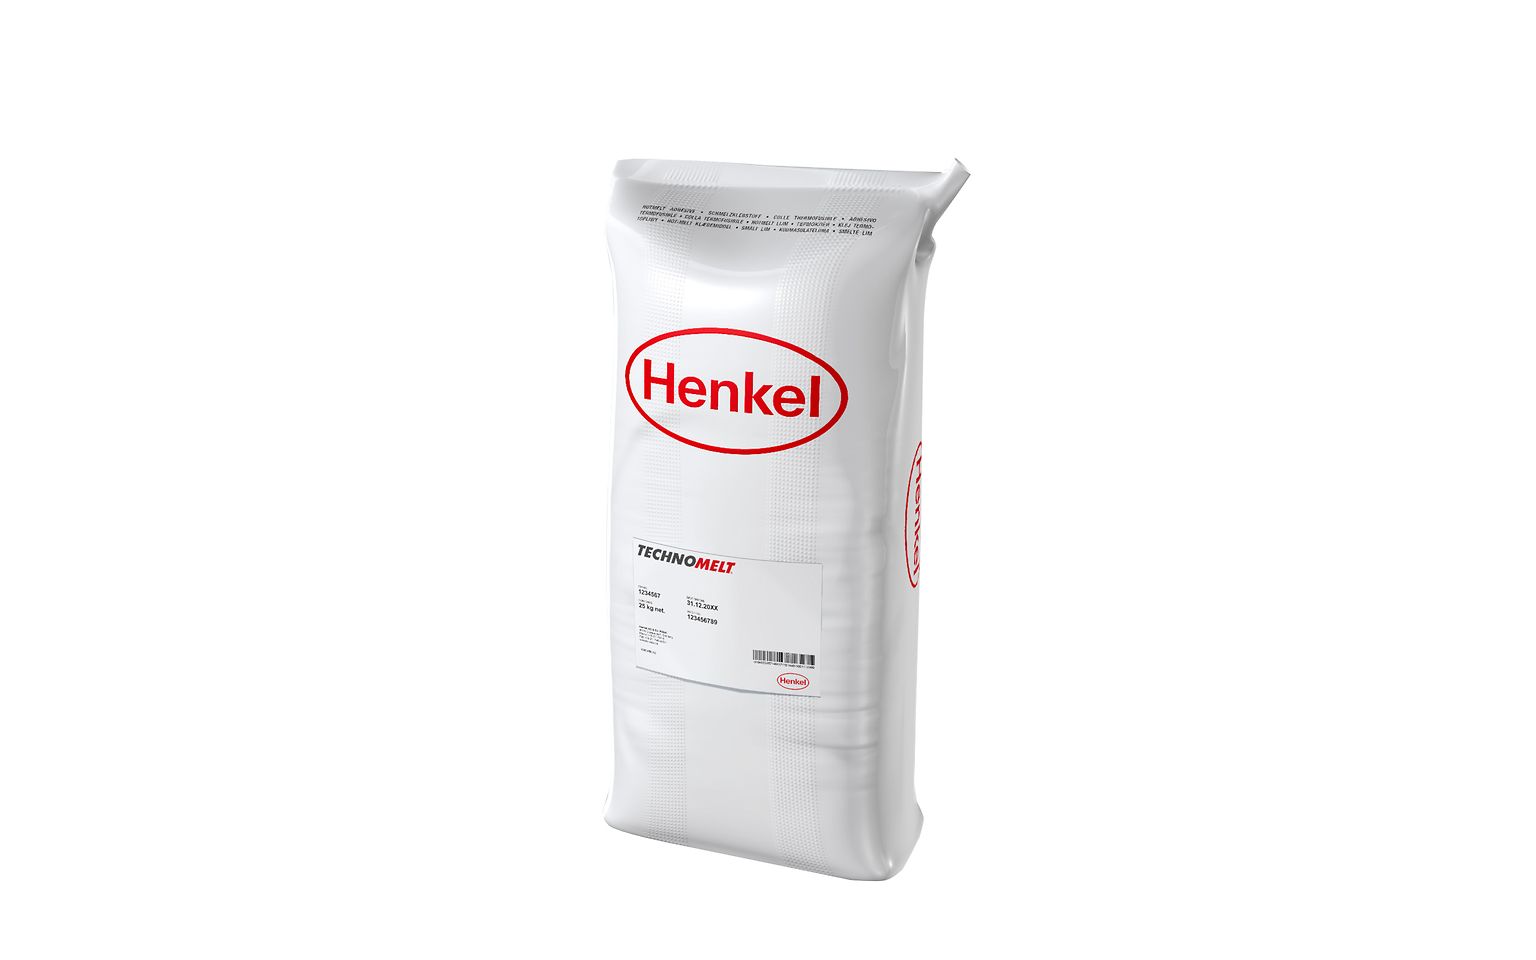 Bag of adhesive from Henkel.